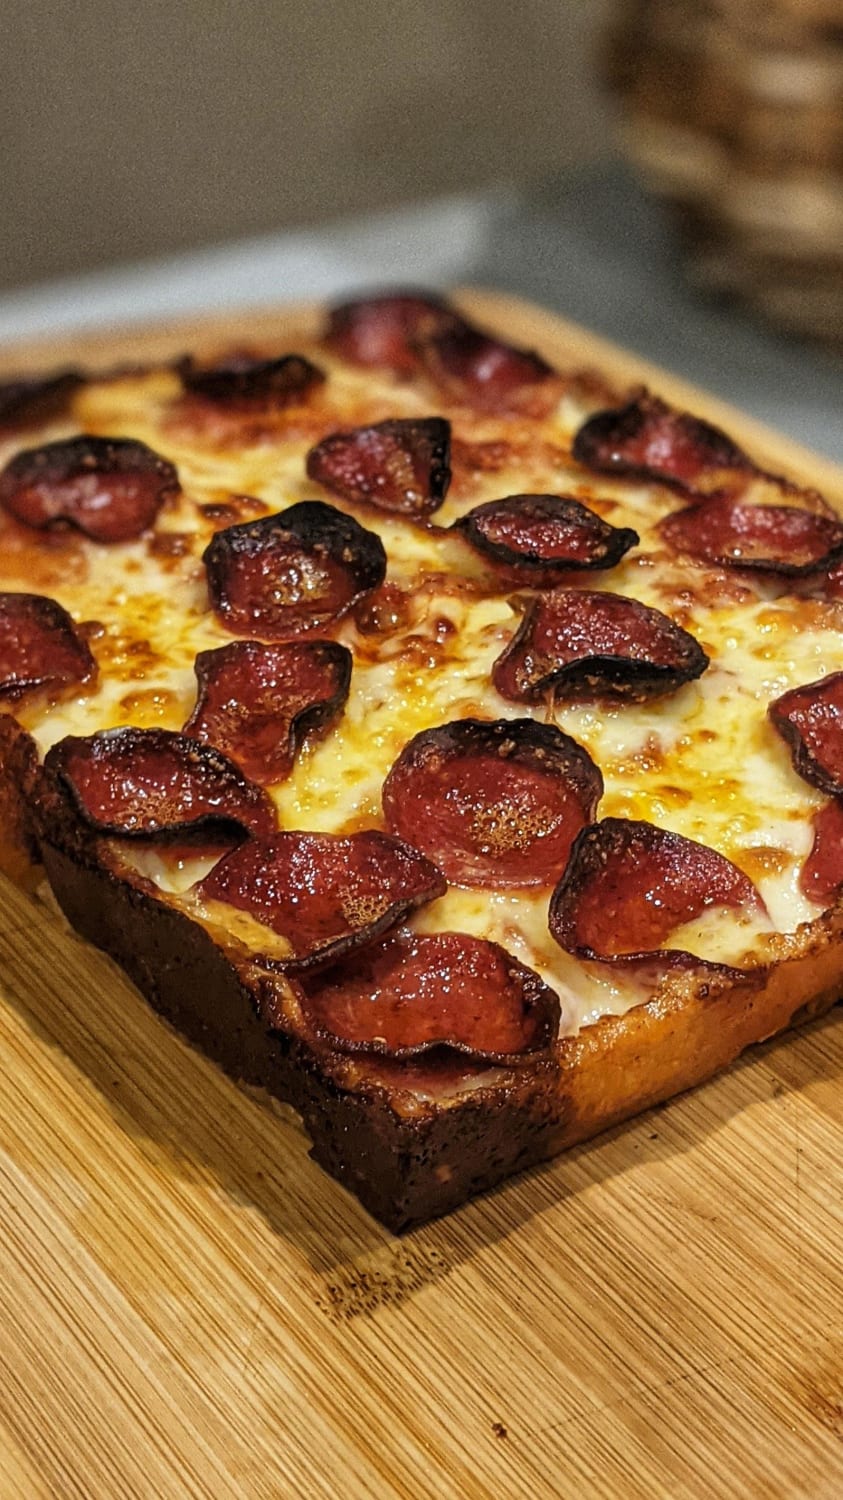 pizza counts as bread right? sourdough Detroit style pepperoni pizza